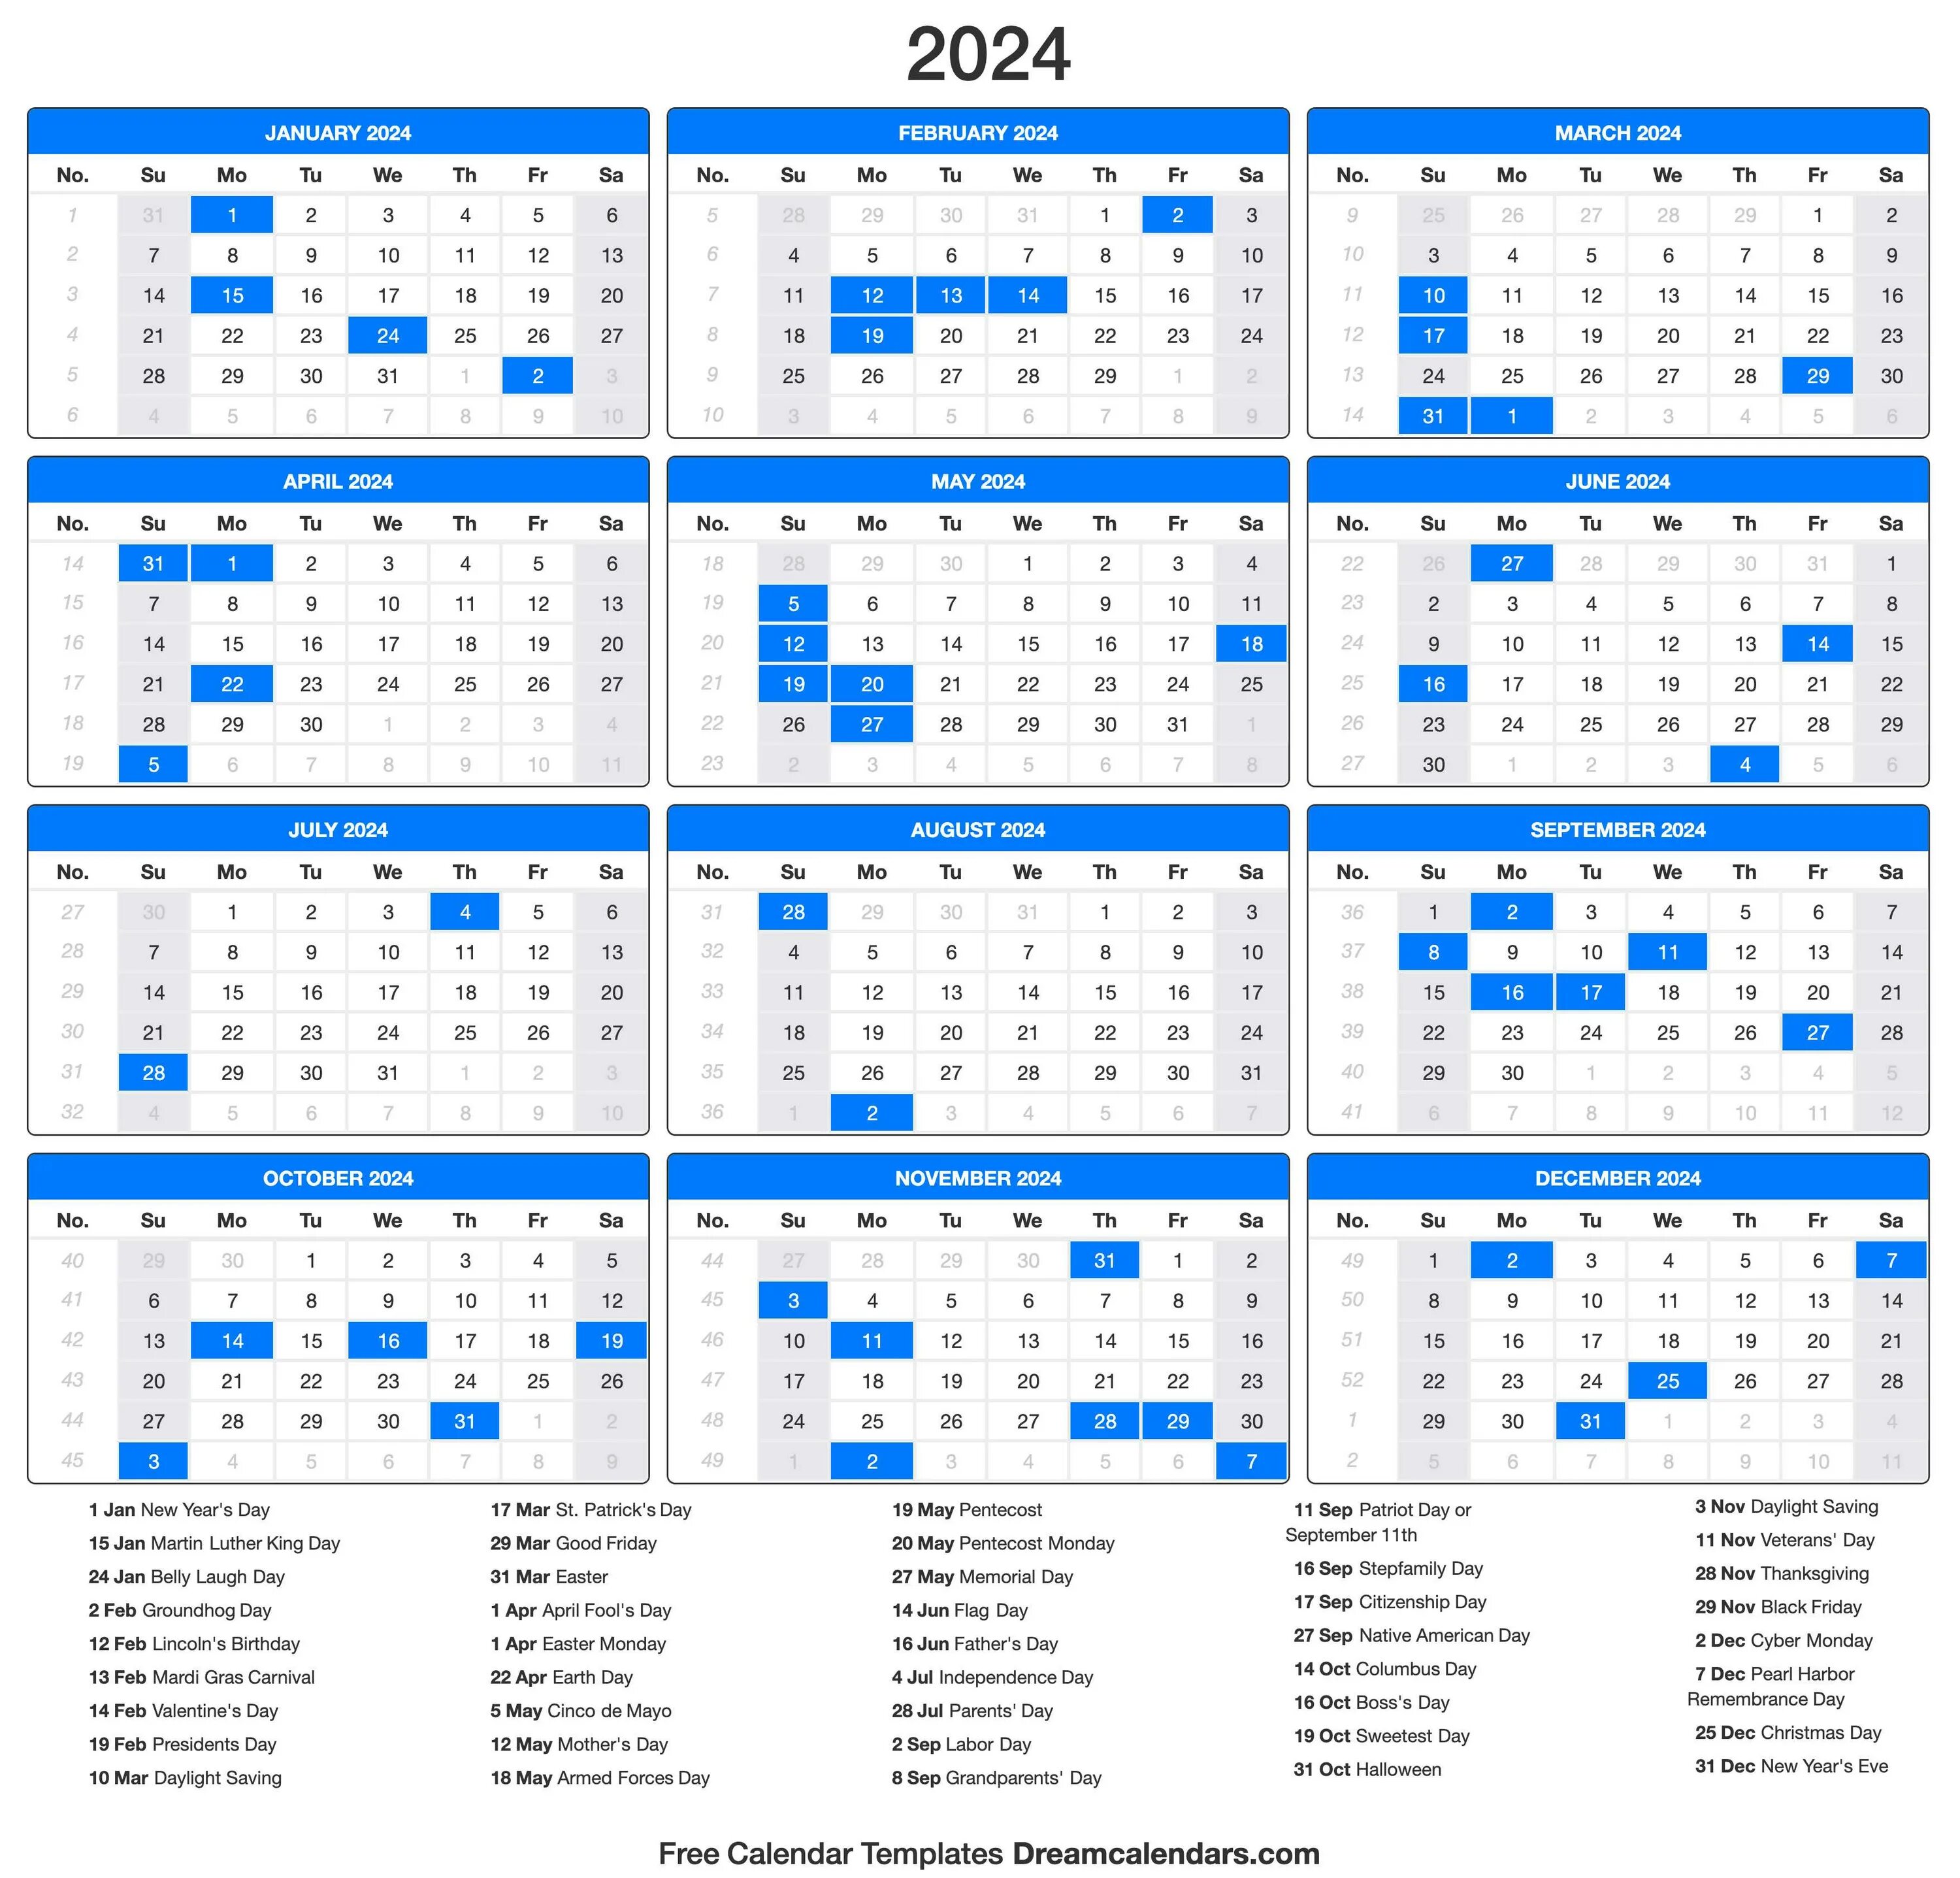 Календарь на 2024 год. Календарь 2069 года. Календарь 2052. Календарь на 2052 год. Медицинские праздники 2024 года